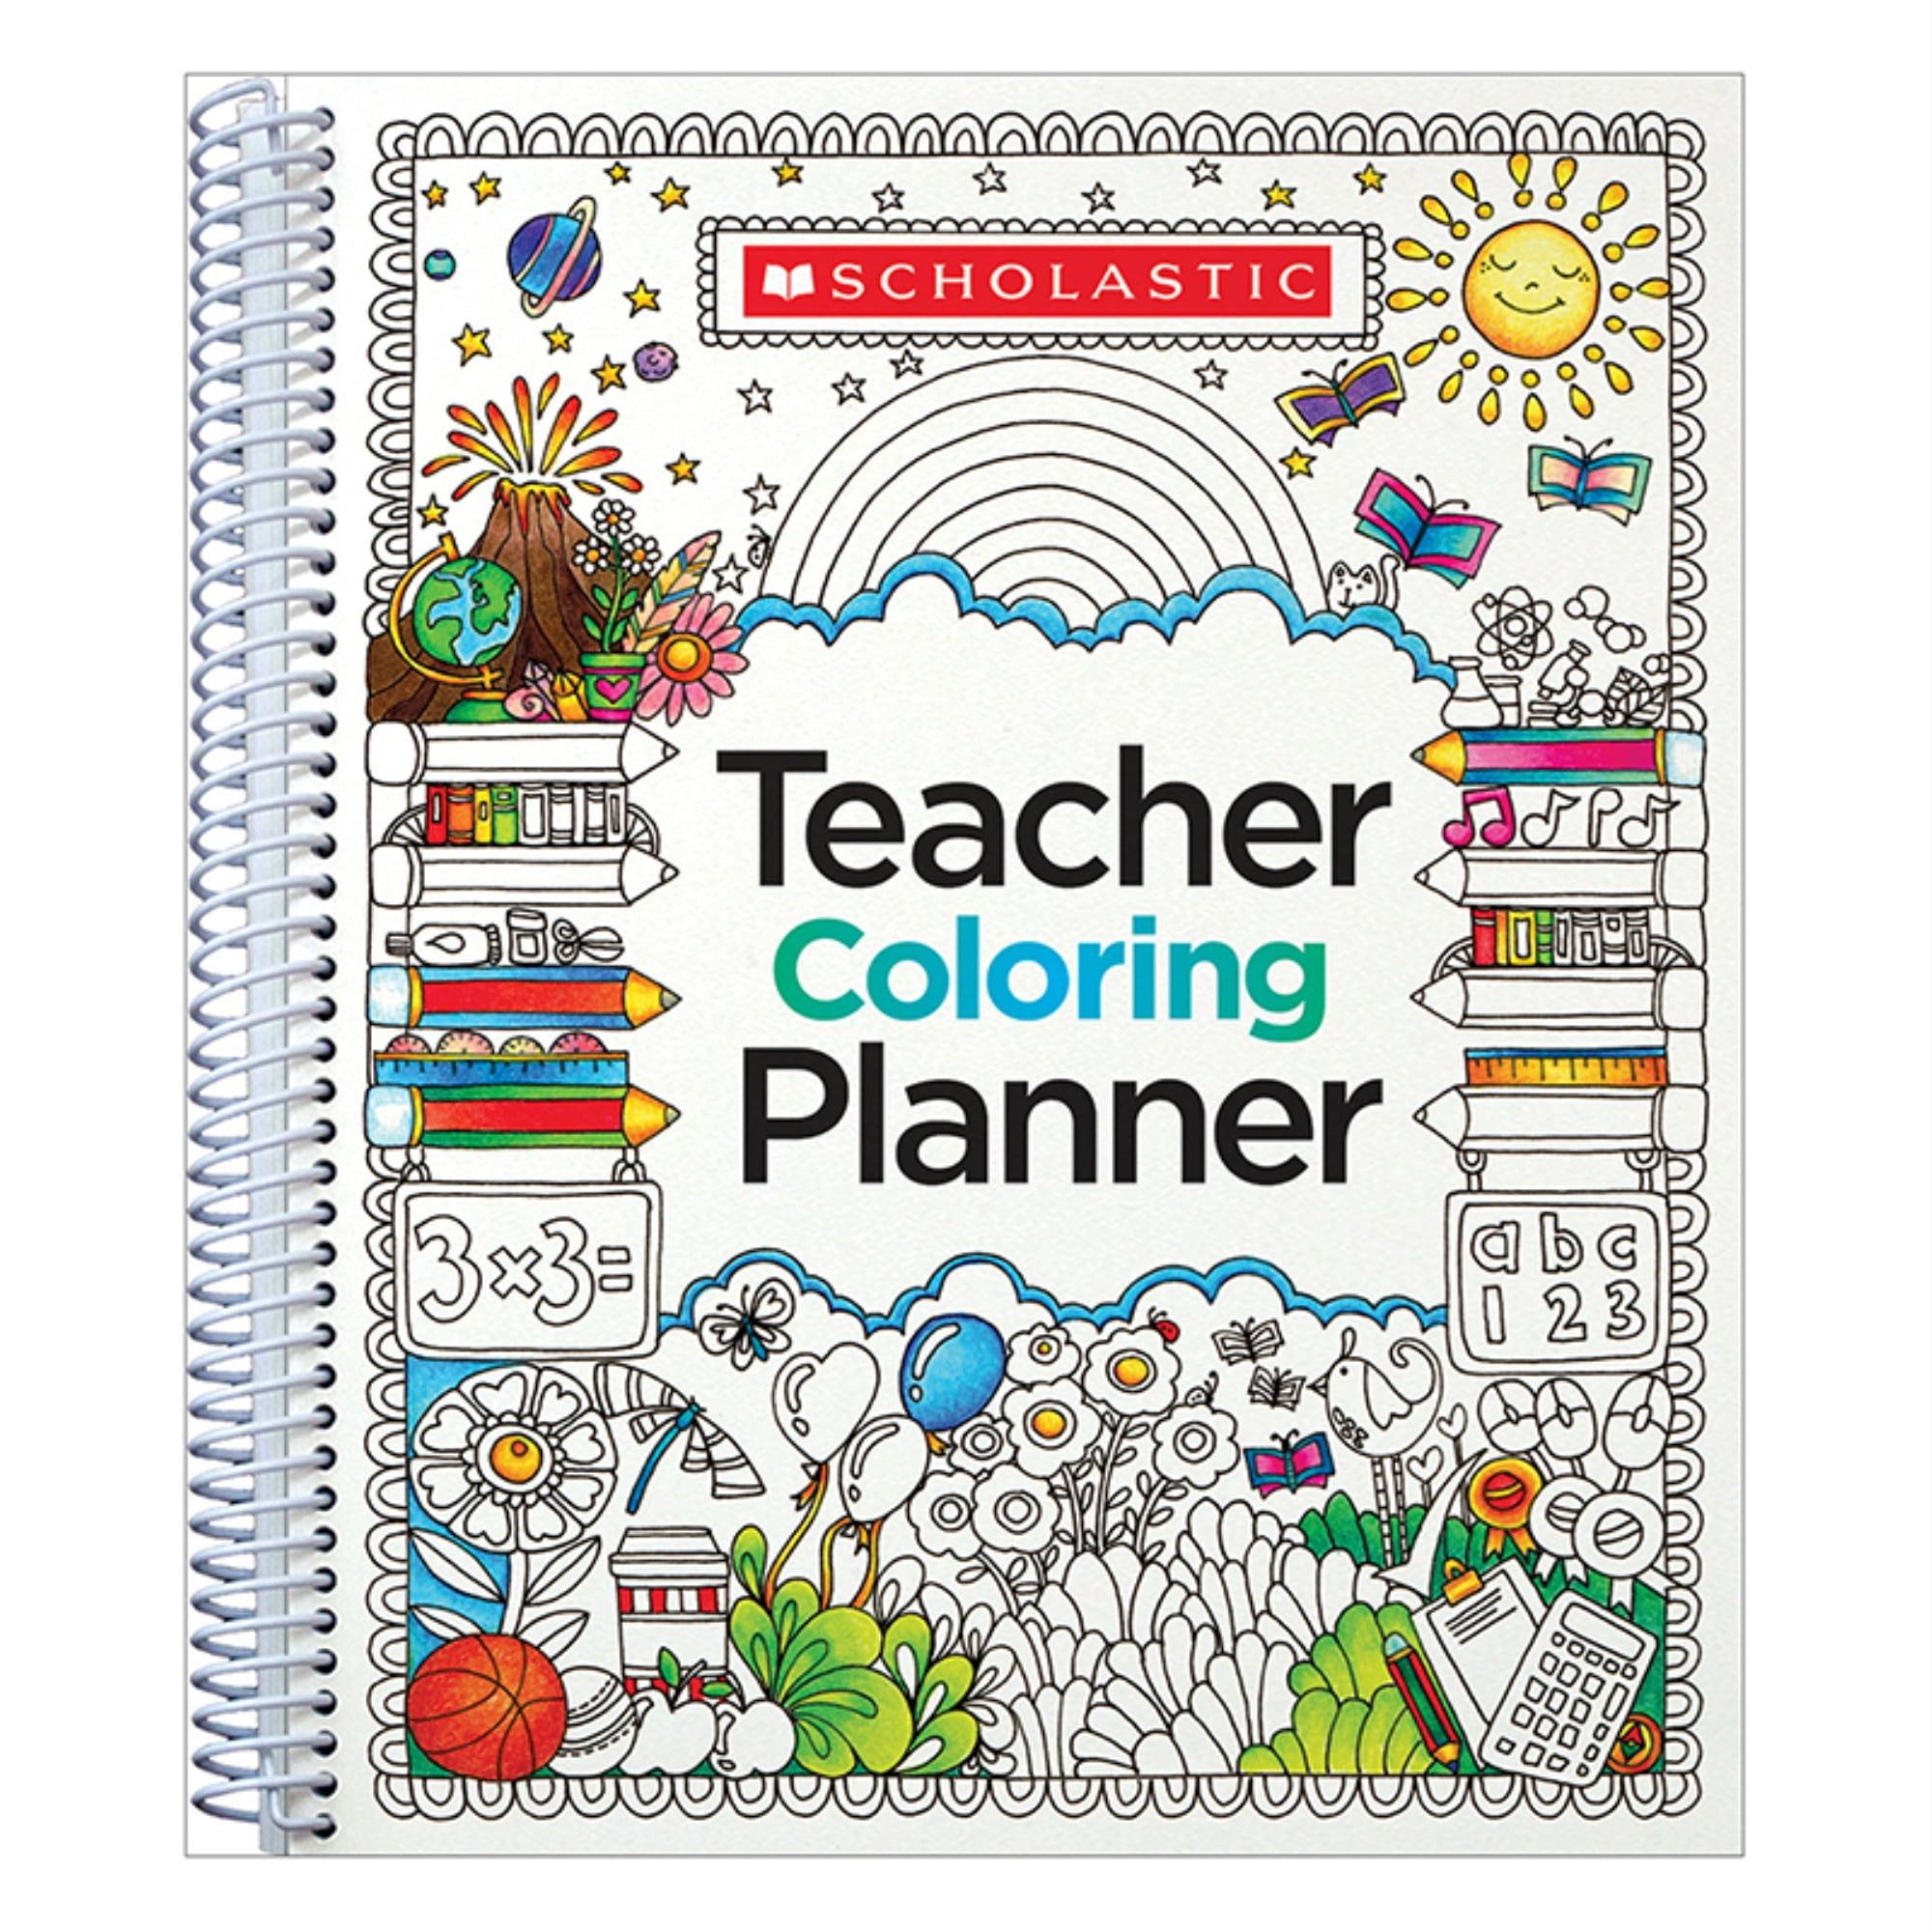 Printable Novel Planning Workbook - Coloring Book Edition